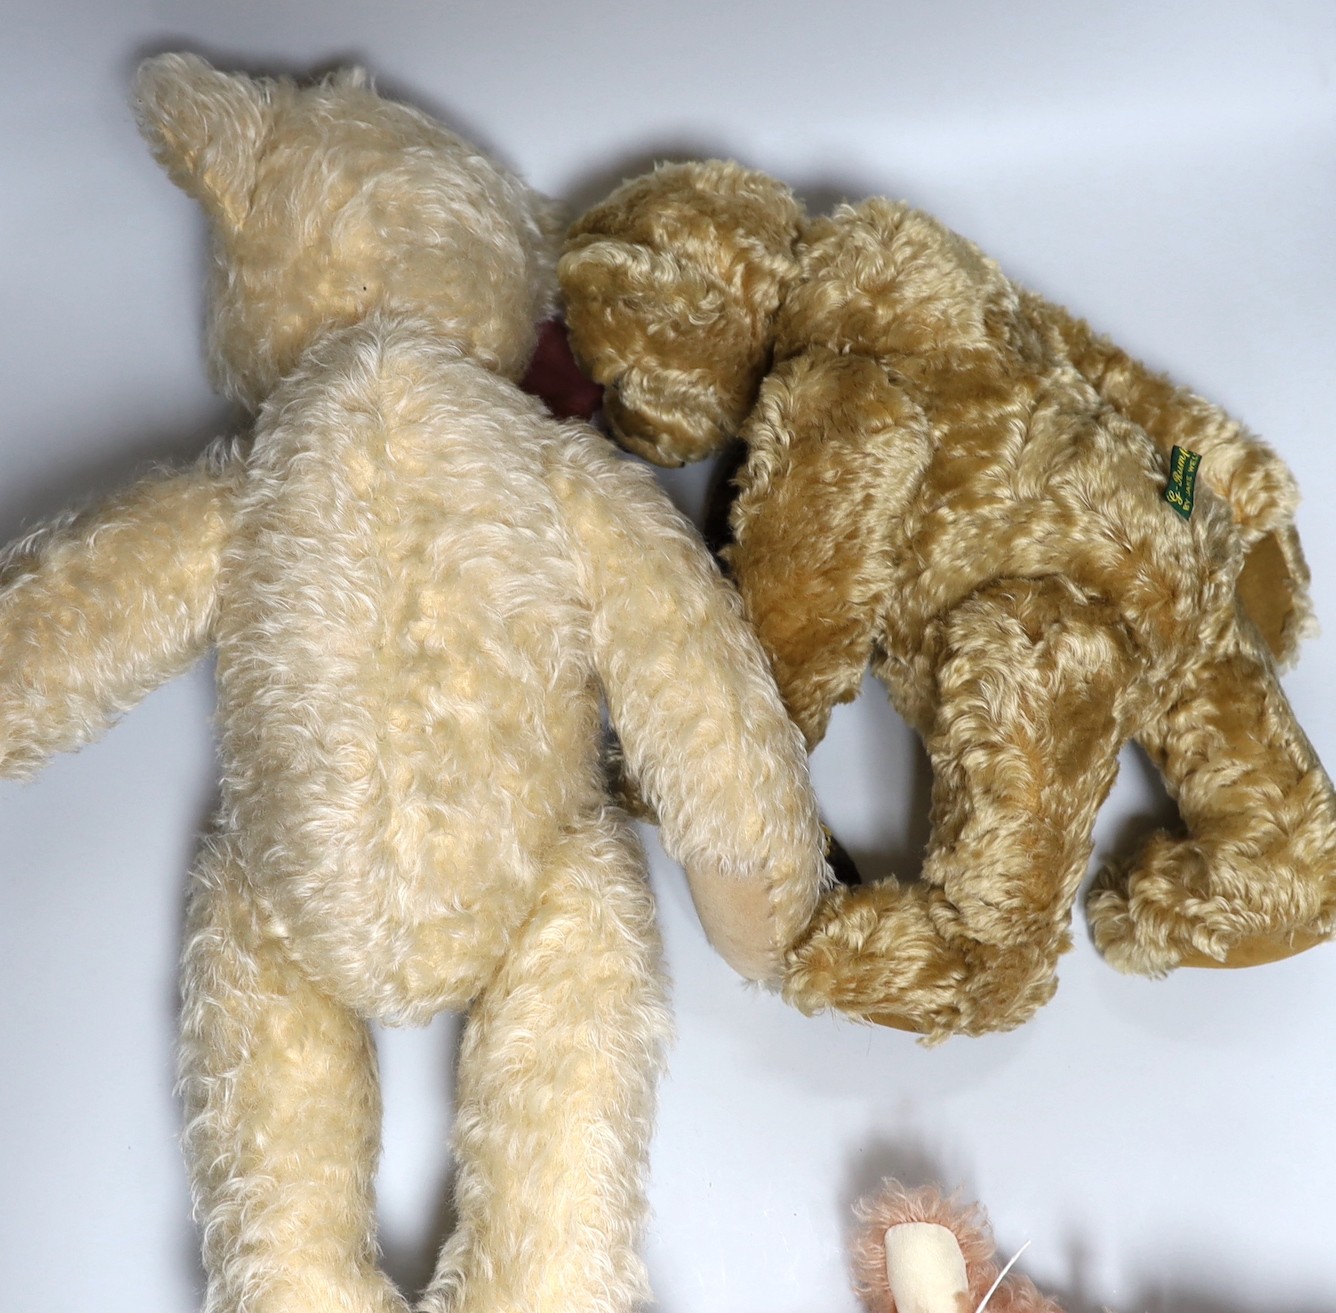 An Hermann ‘English Rose’ Teddy bear, G-Rumpy Bears ‘Emerson’, and a Deans blonde plush Teddy bear